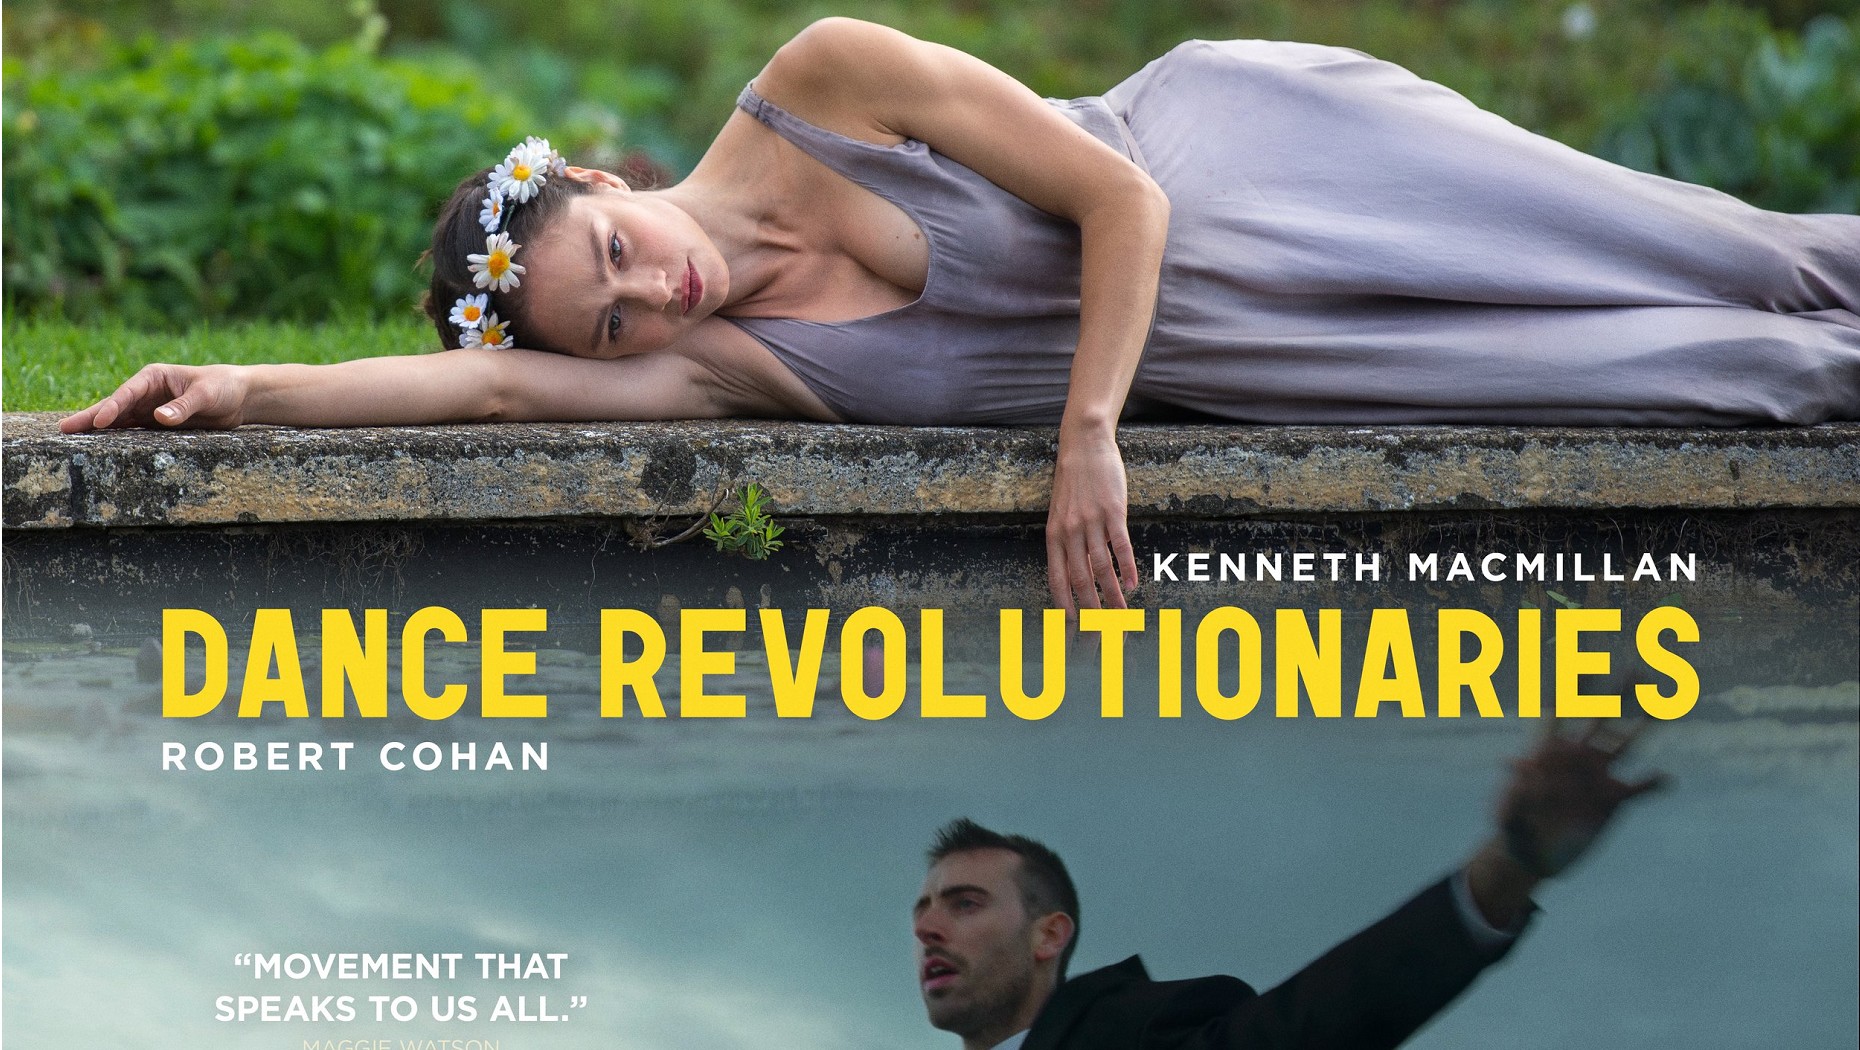 Dance Revolutionaries